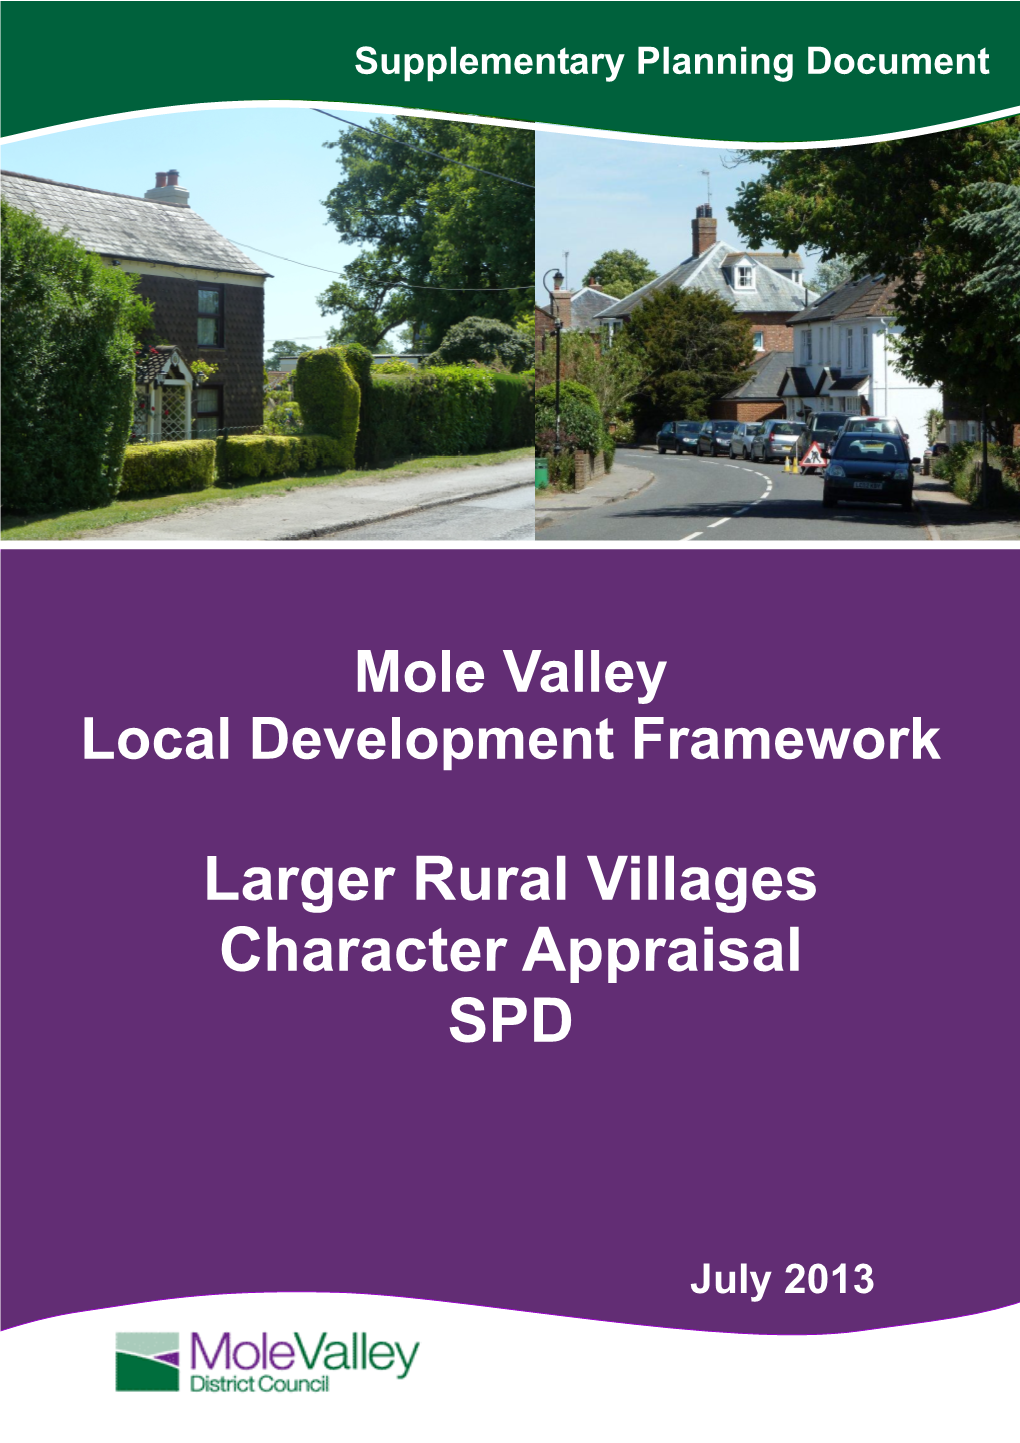 Larger Rural Villages Character Appraisals SPD Contents